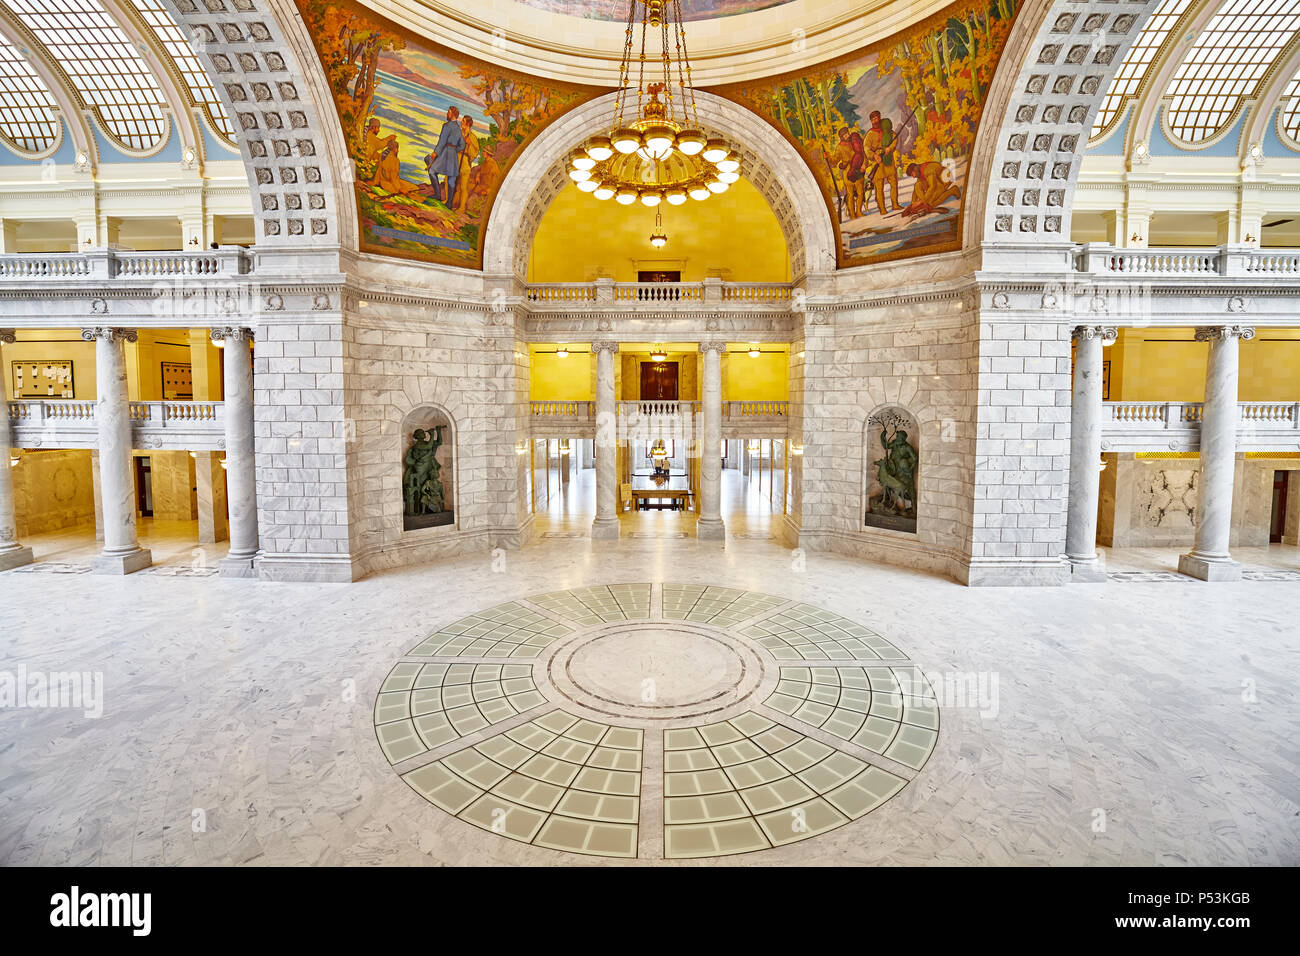 Salt Lake City, USA - October 23, 2016: Elegant interior of the Utah State Capitol building. Stock Photo